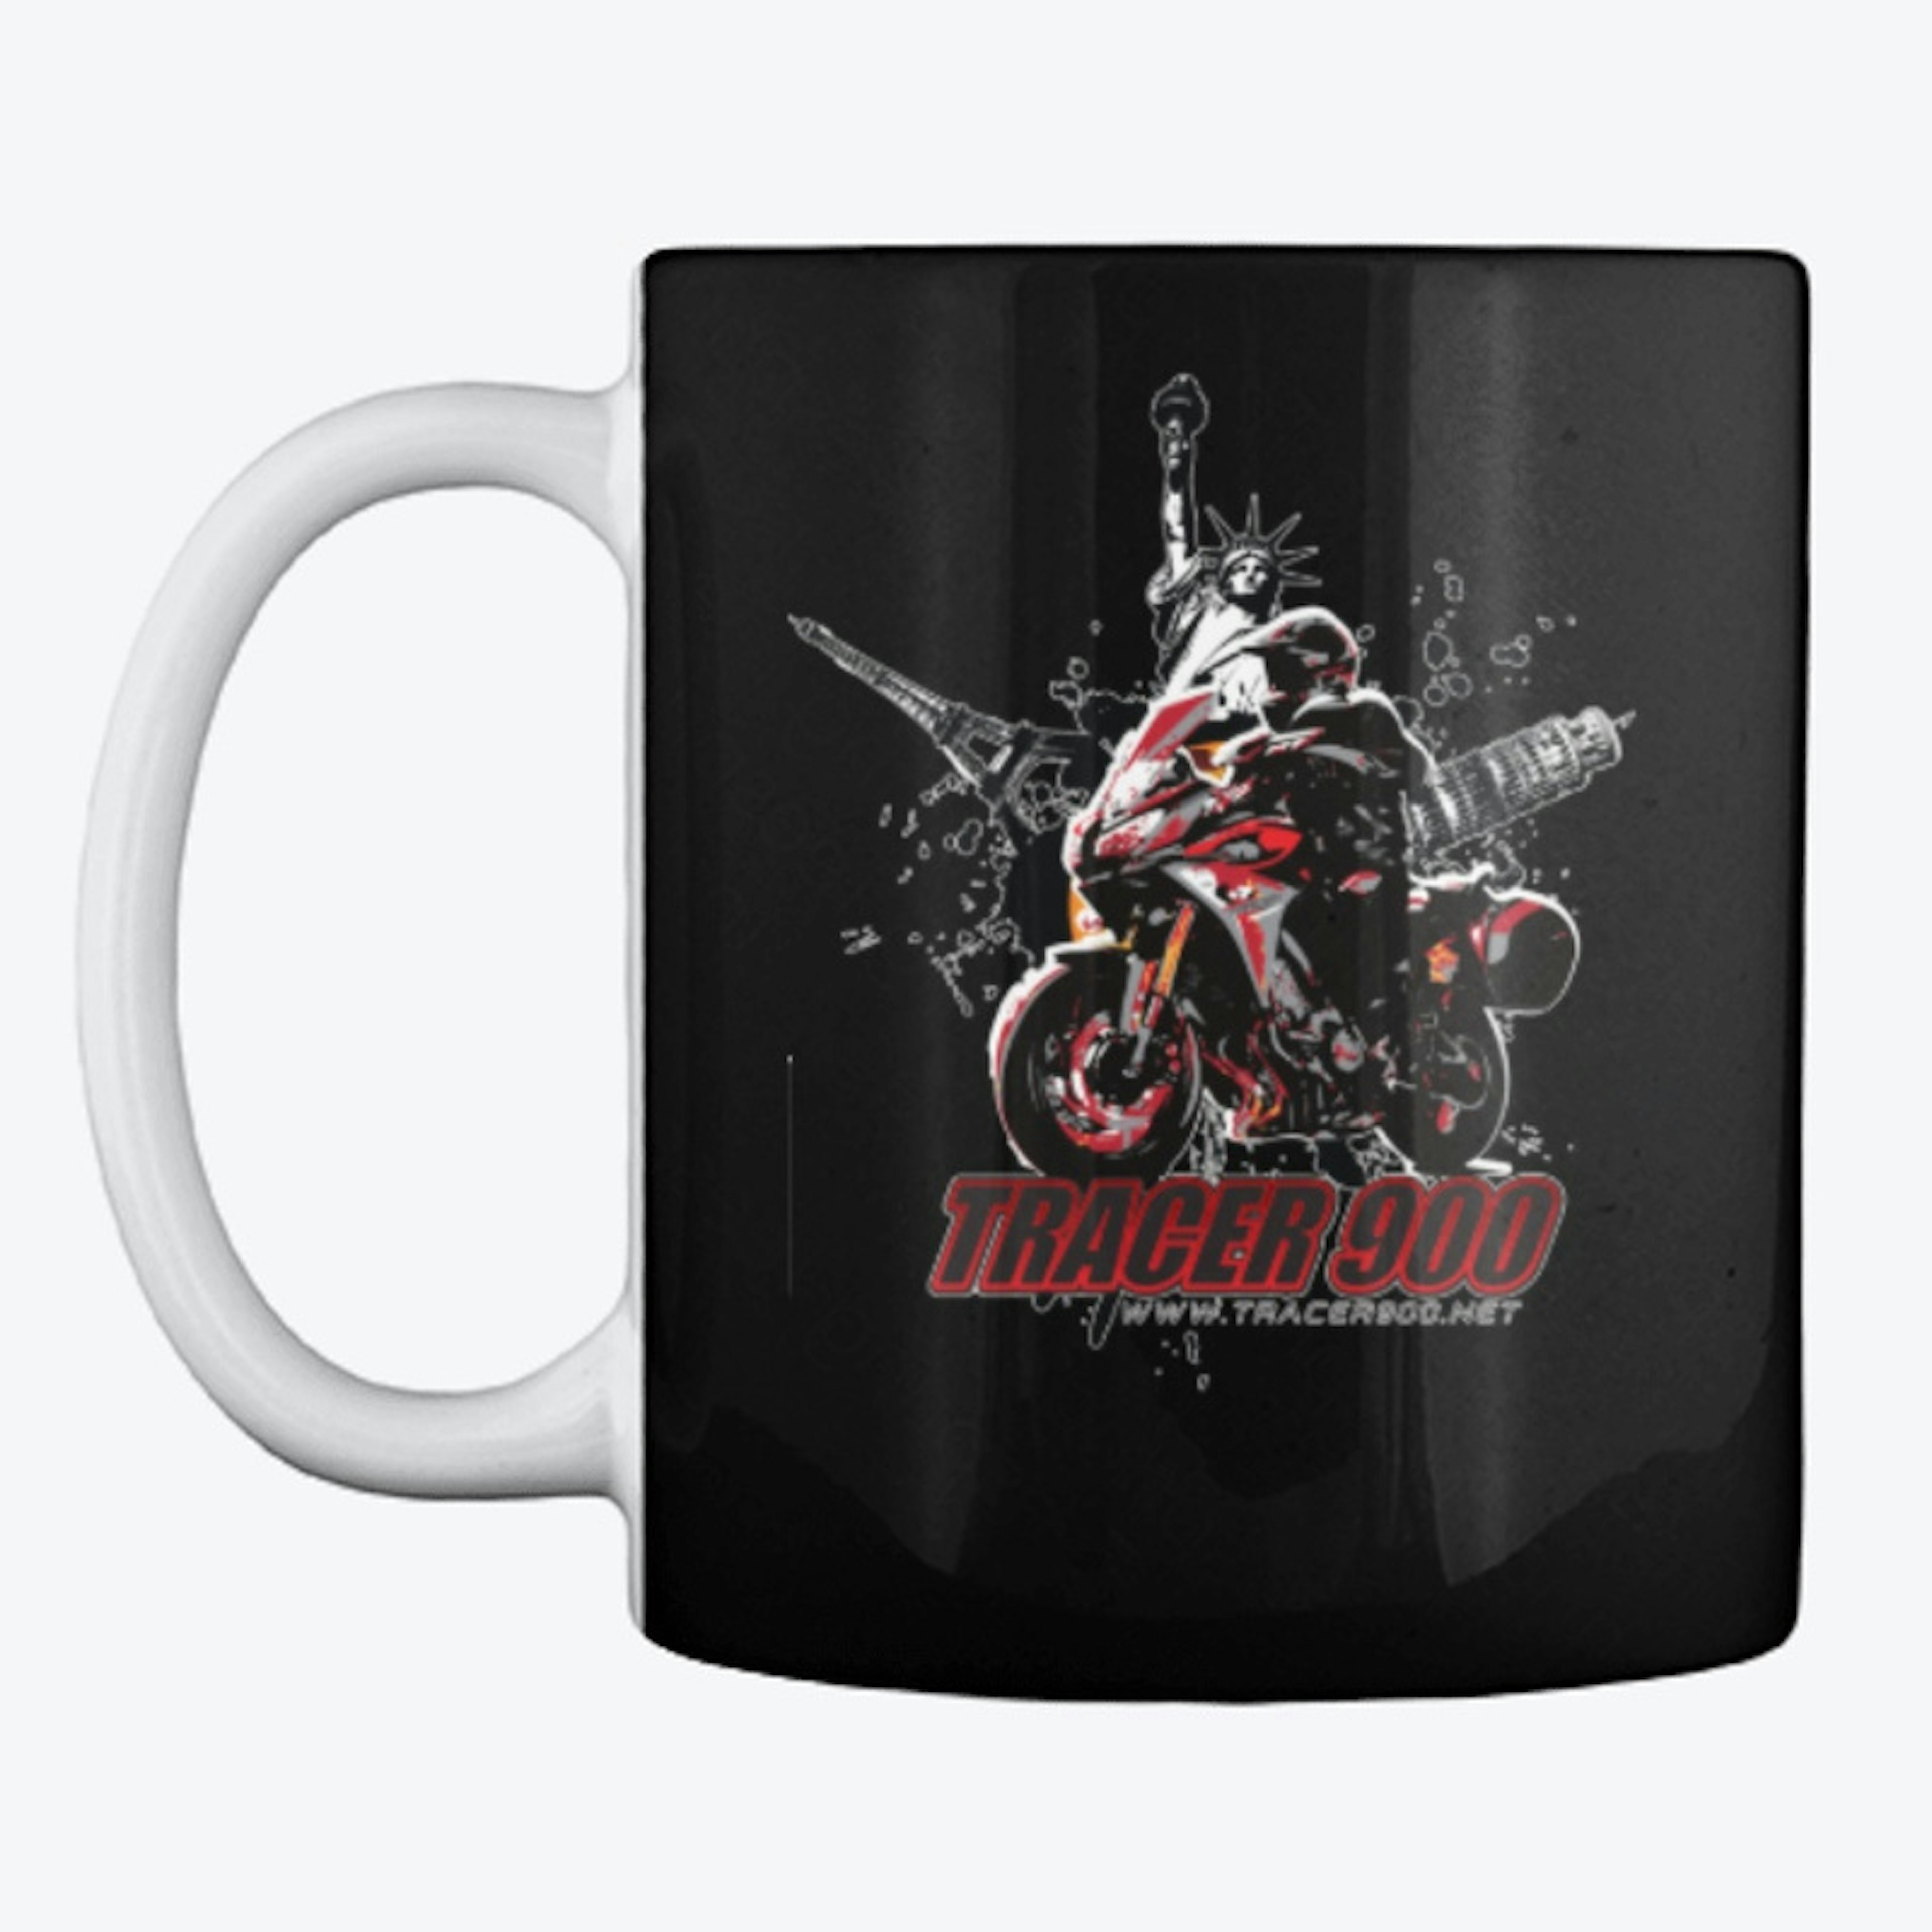 Tracer 900 Coffee Mug